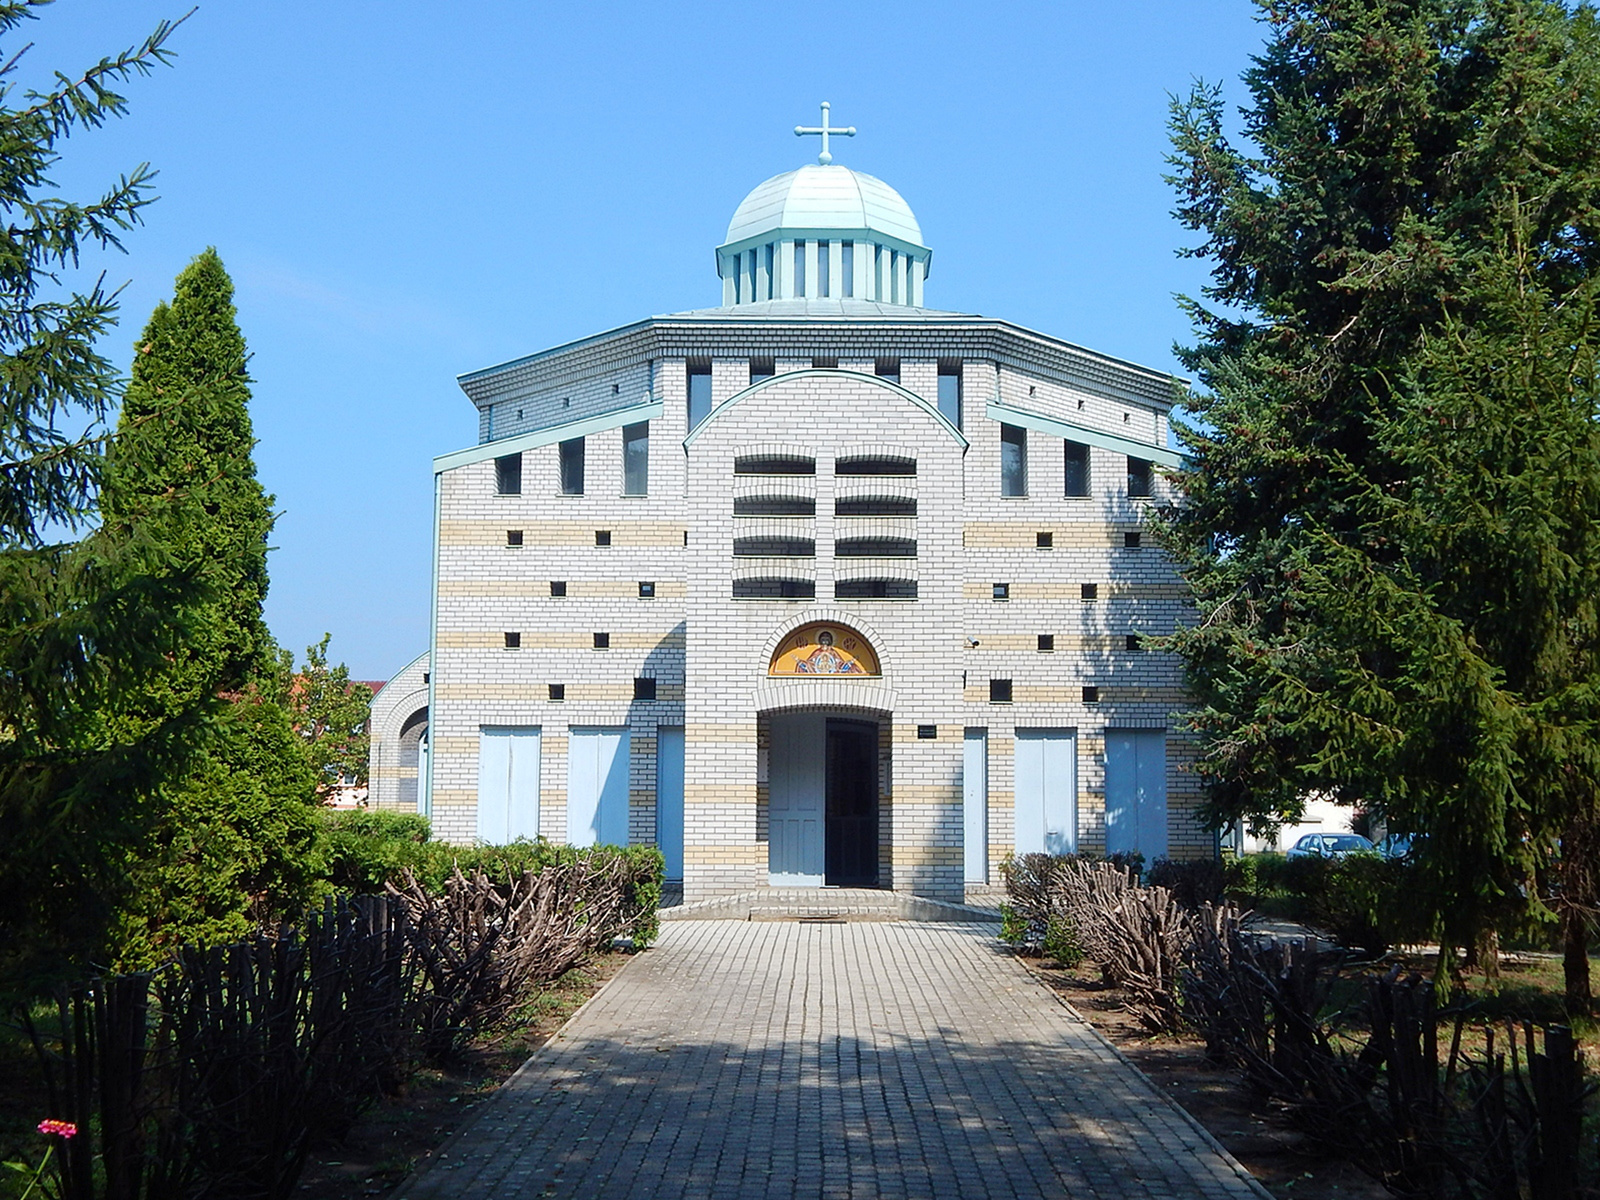 Görögkatolikus templom